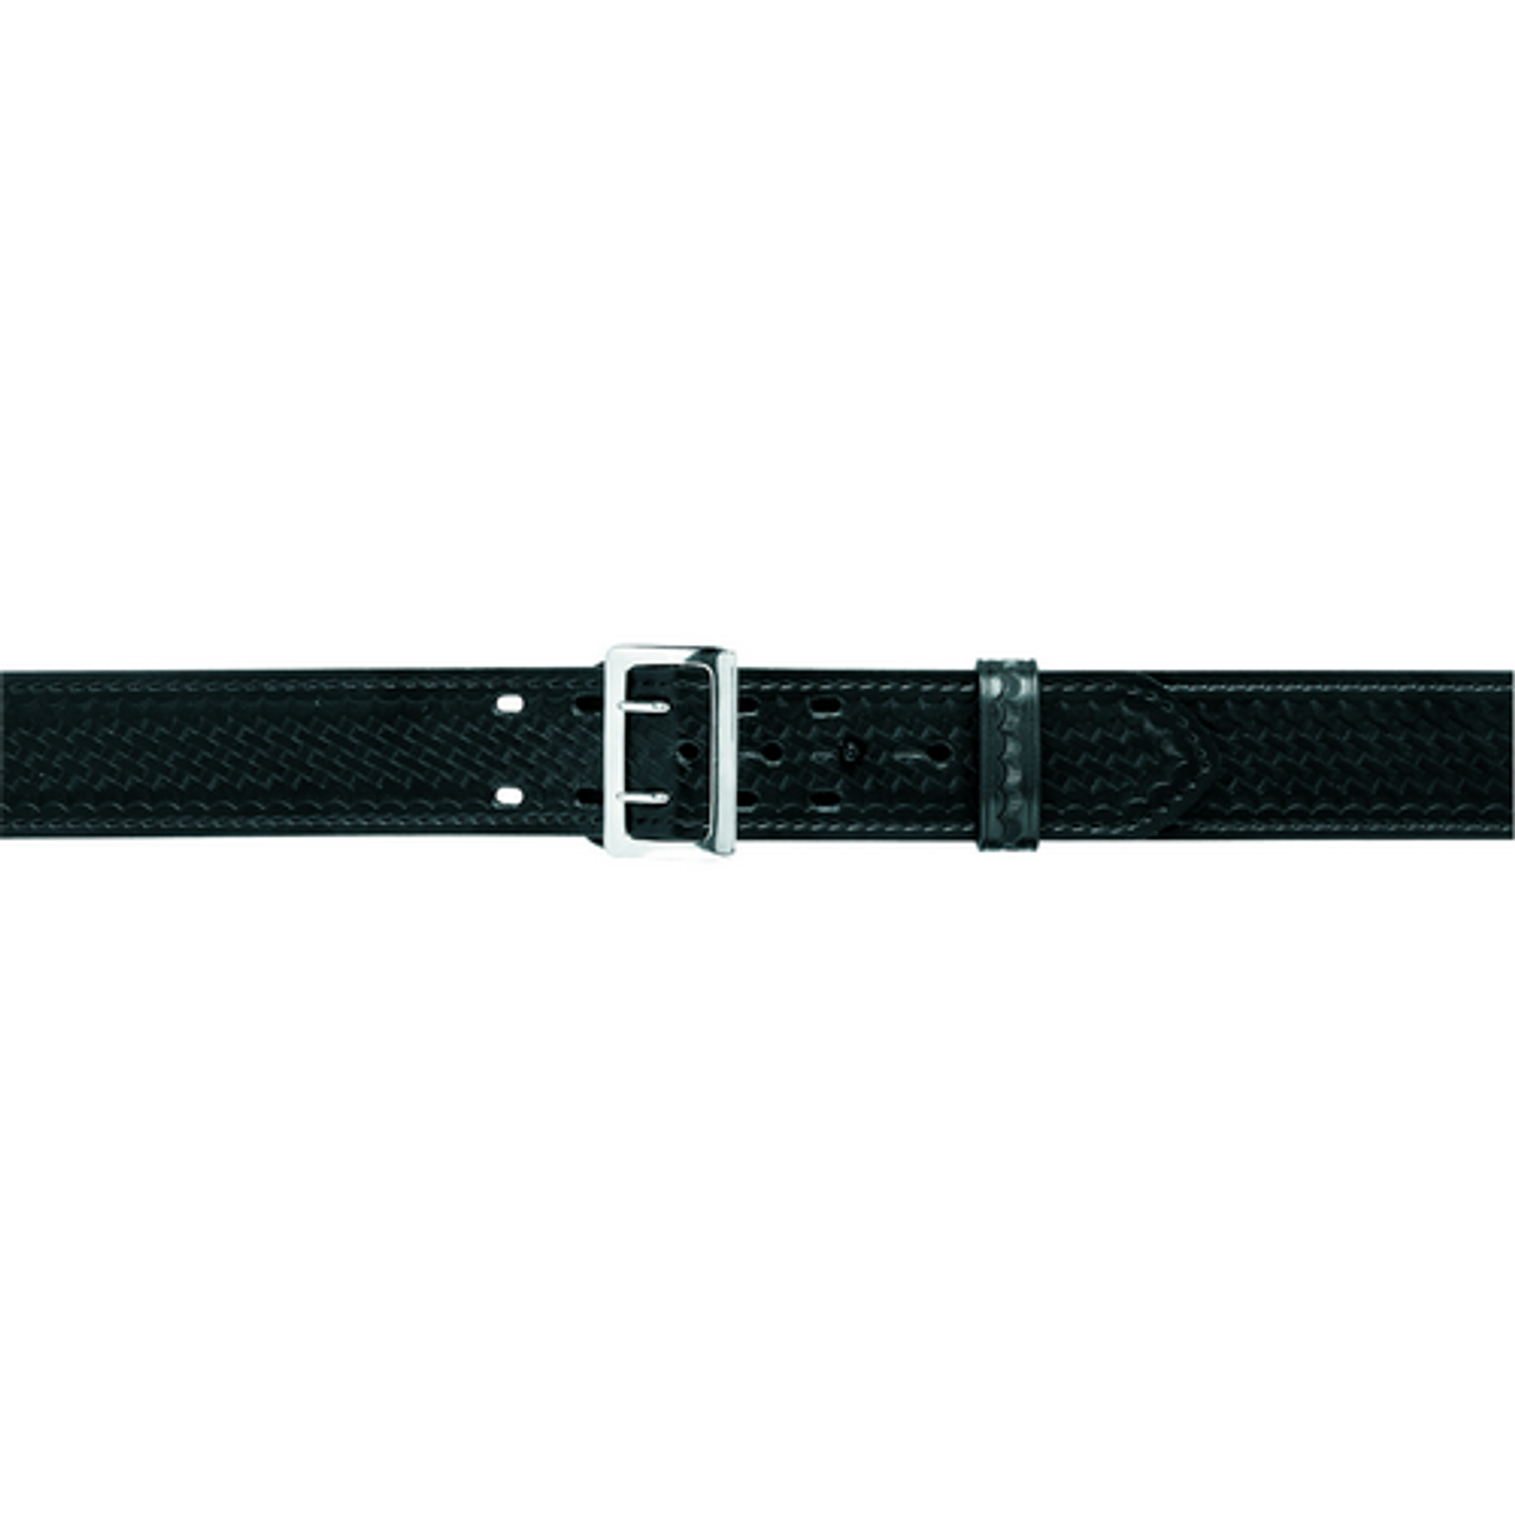 87 - Sam Browne Buckled Duty Belt, 2.25 (58mm) - KR87-44-9B